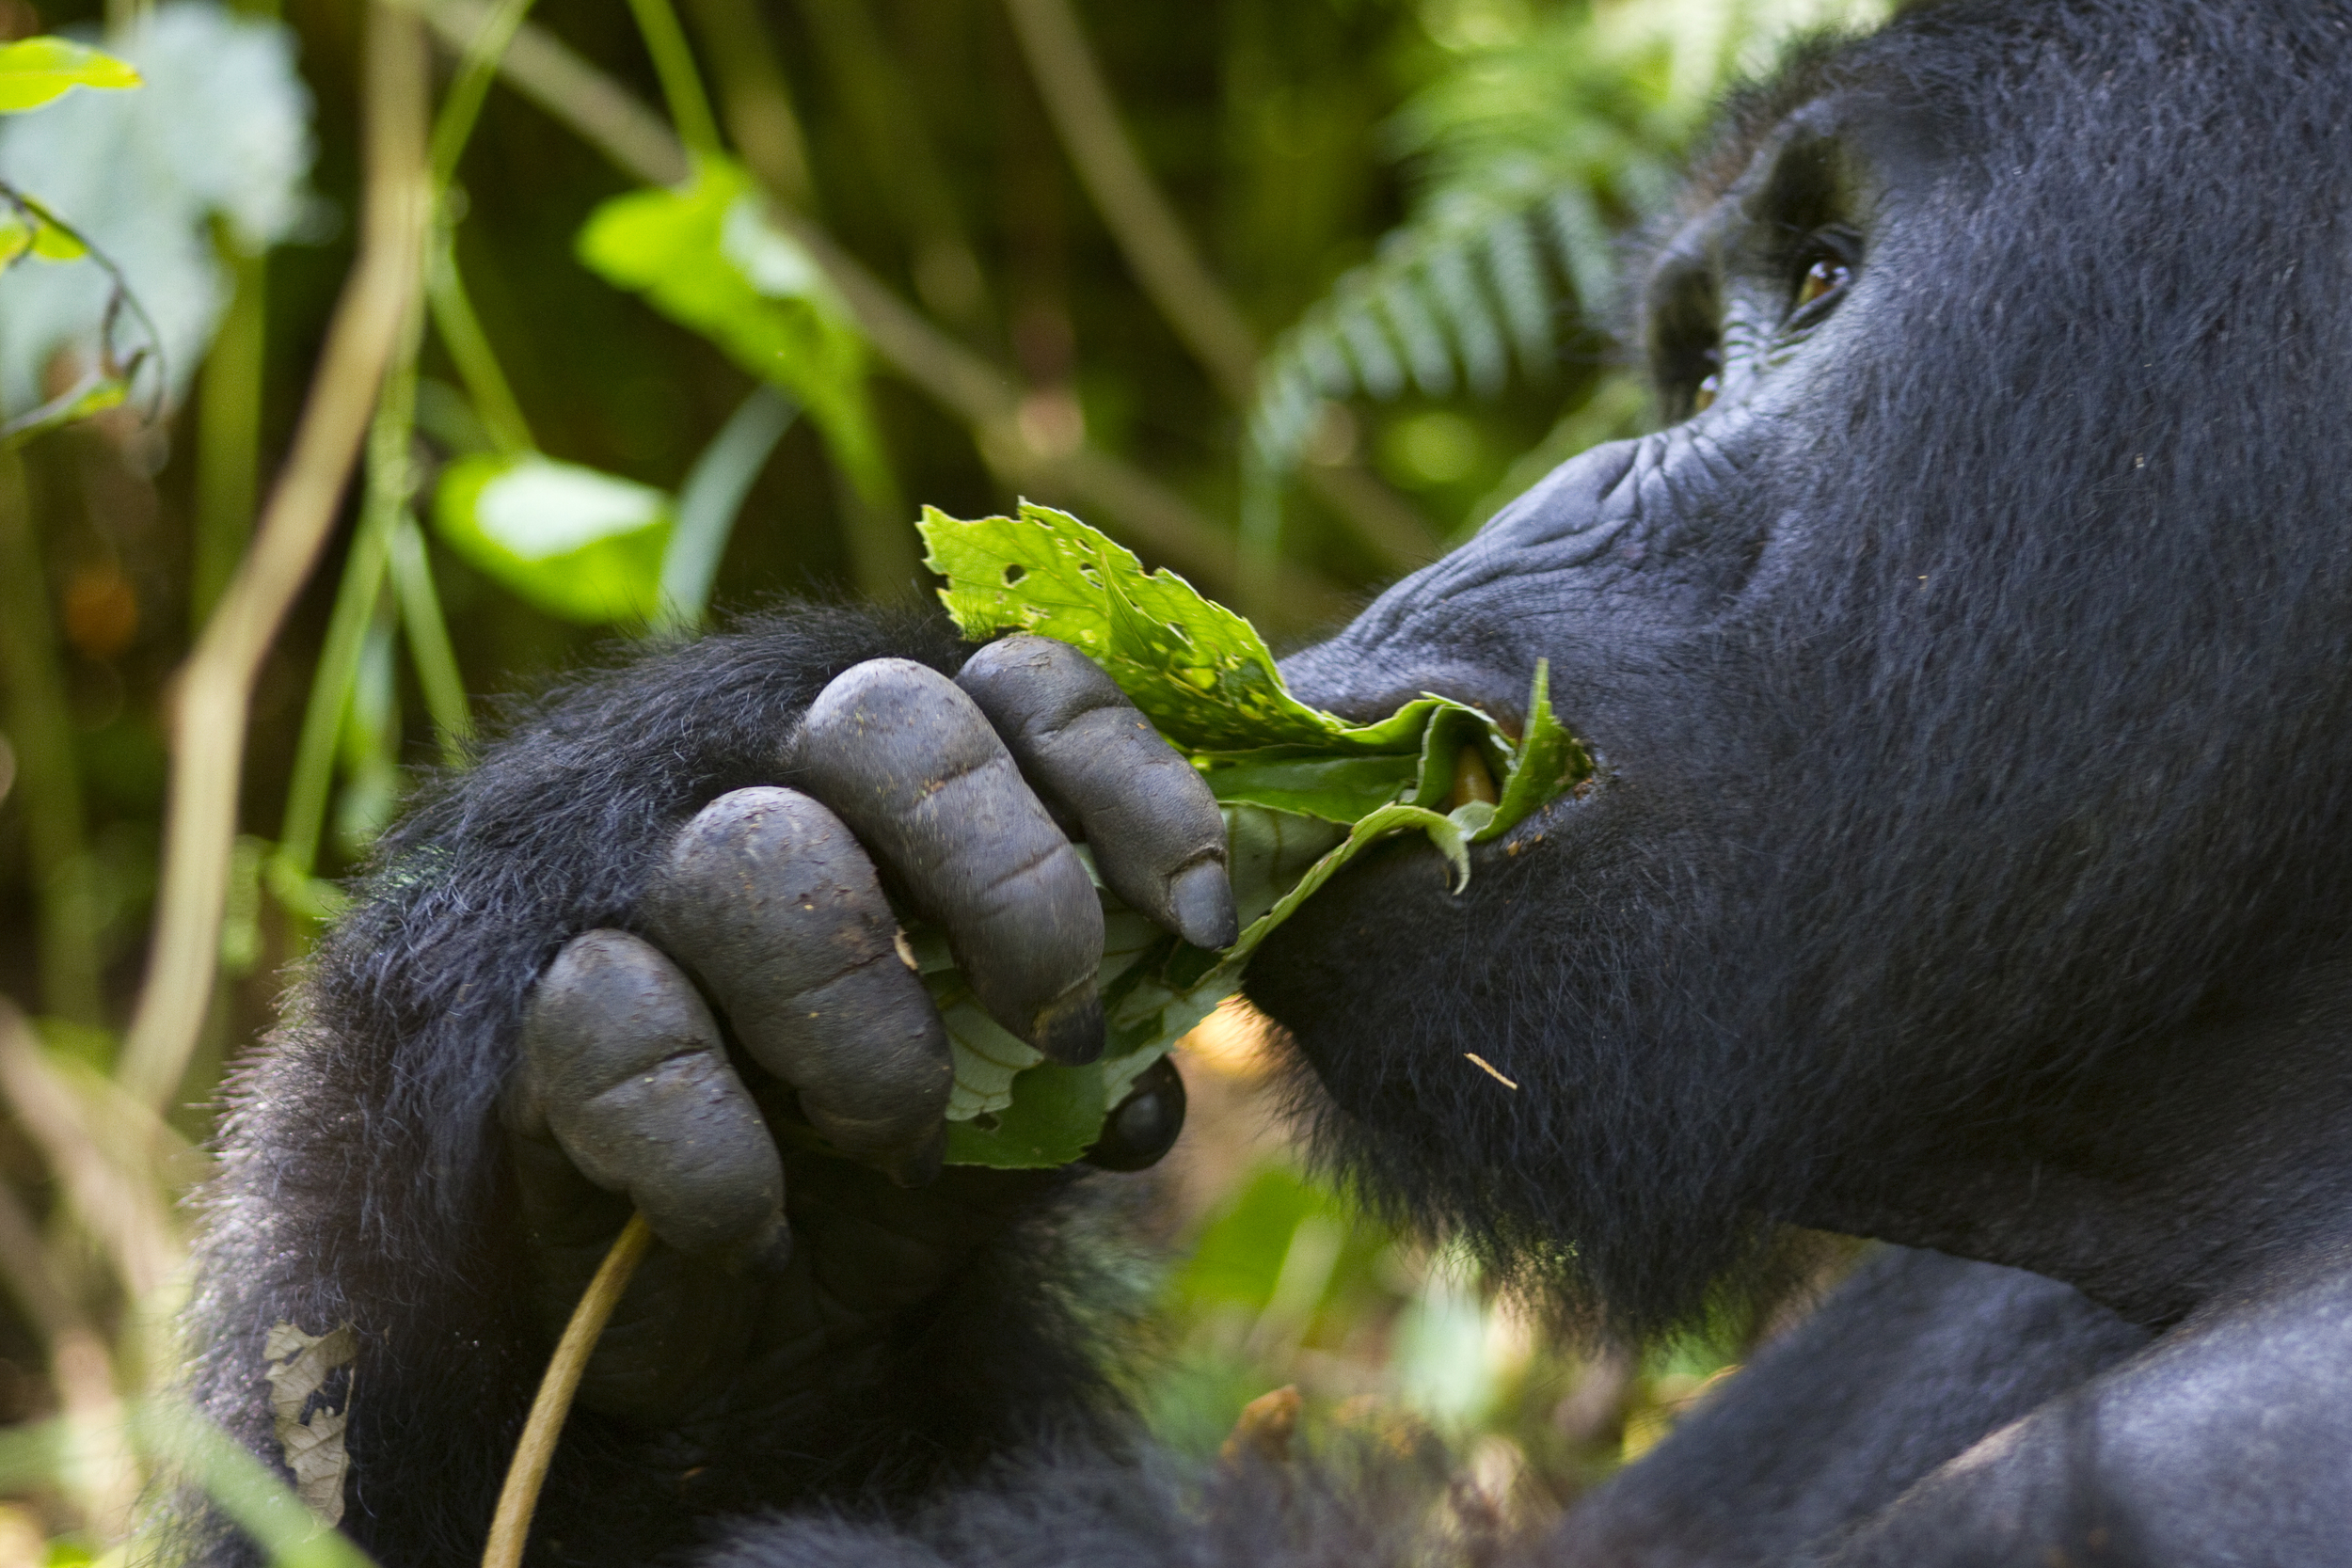  Berggorilla   Gorilla beringei beringei    Uganda    Bwindi NP    2012  